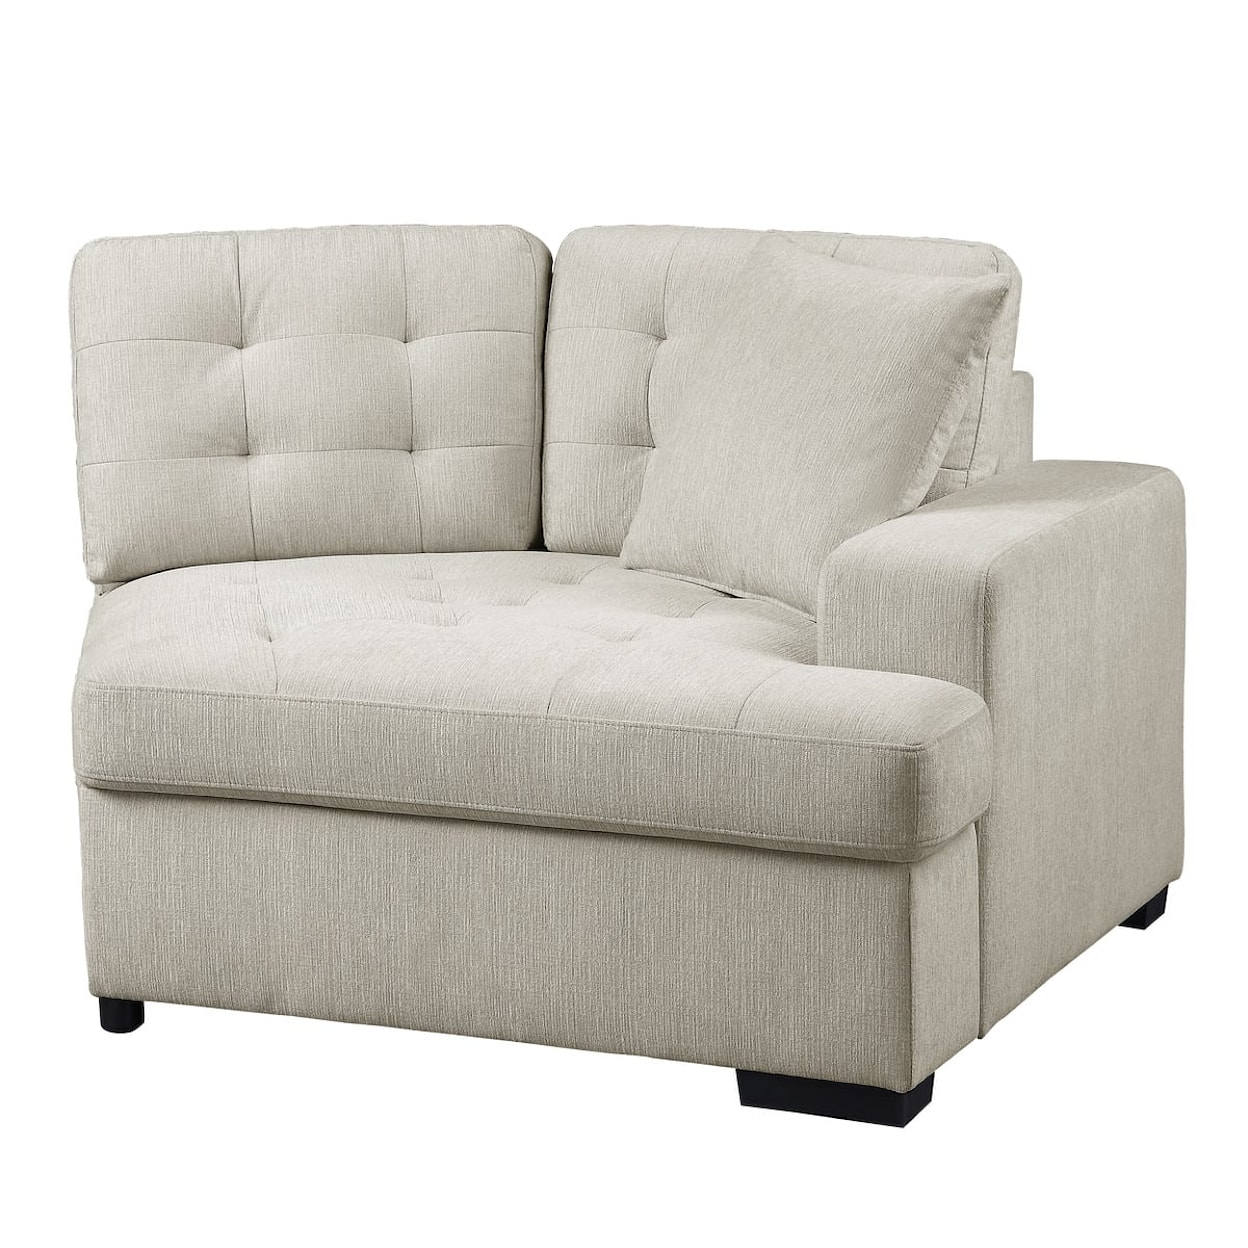 Homelegance Furniture Logansport 2-Piece Sectional Sofa